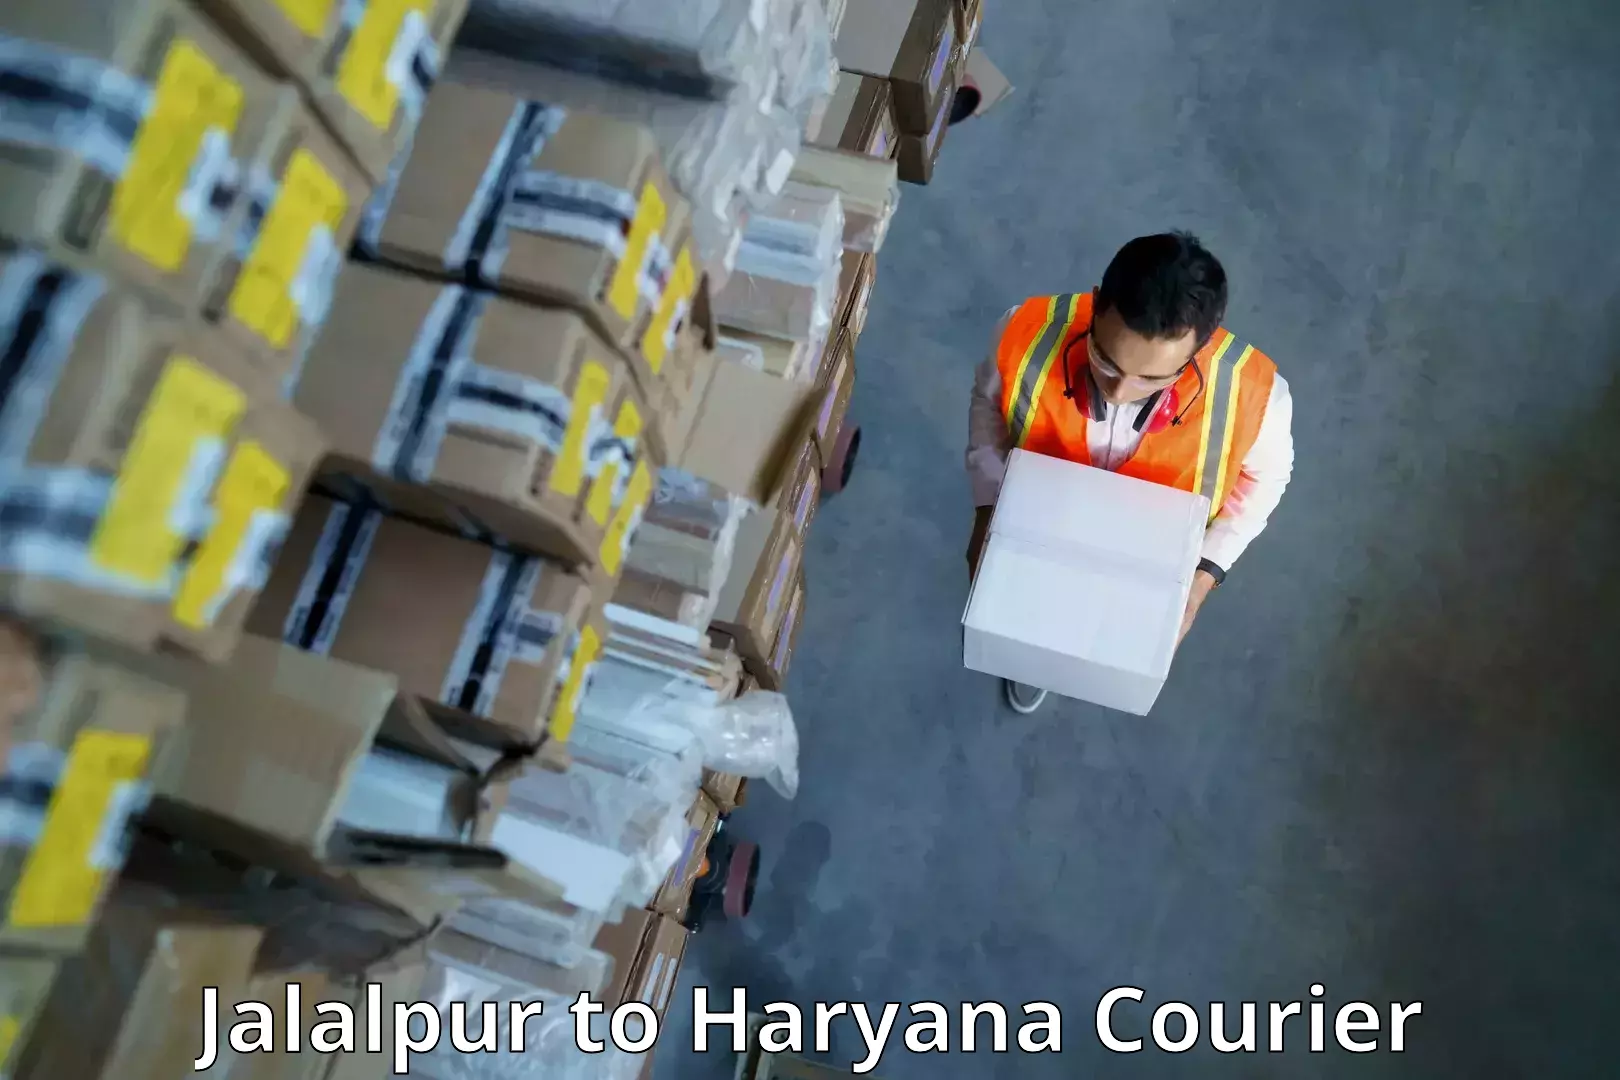 Courier service partnerships in Jalalpur to Panchkula